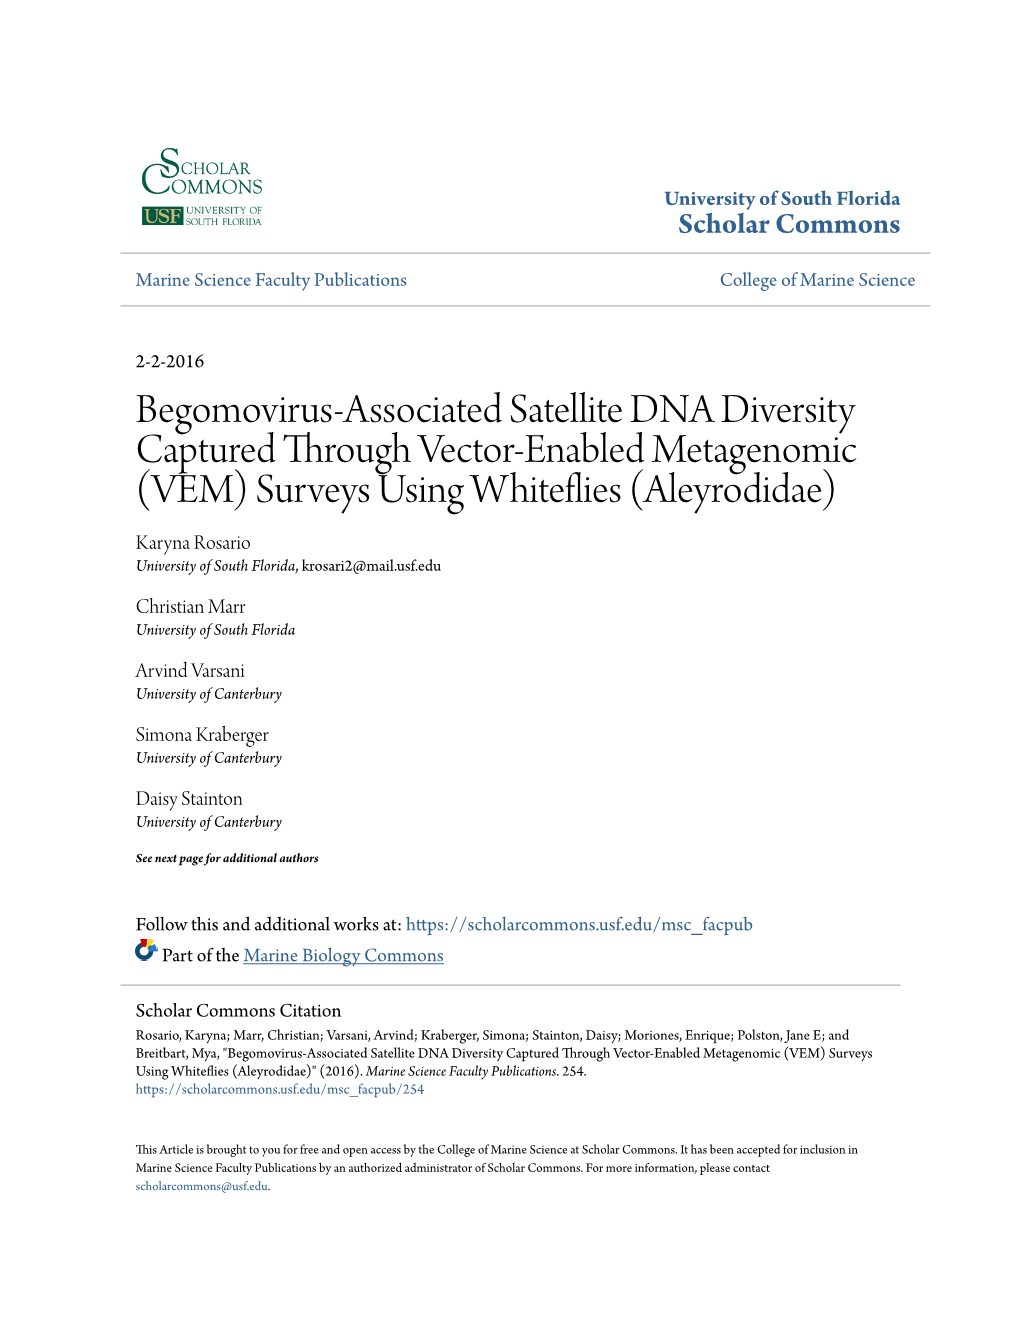 Begomovirus-Associated Satellite DNA Diversity Captured Through